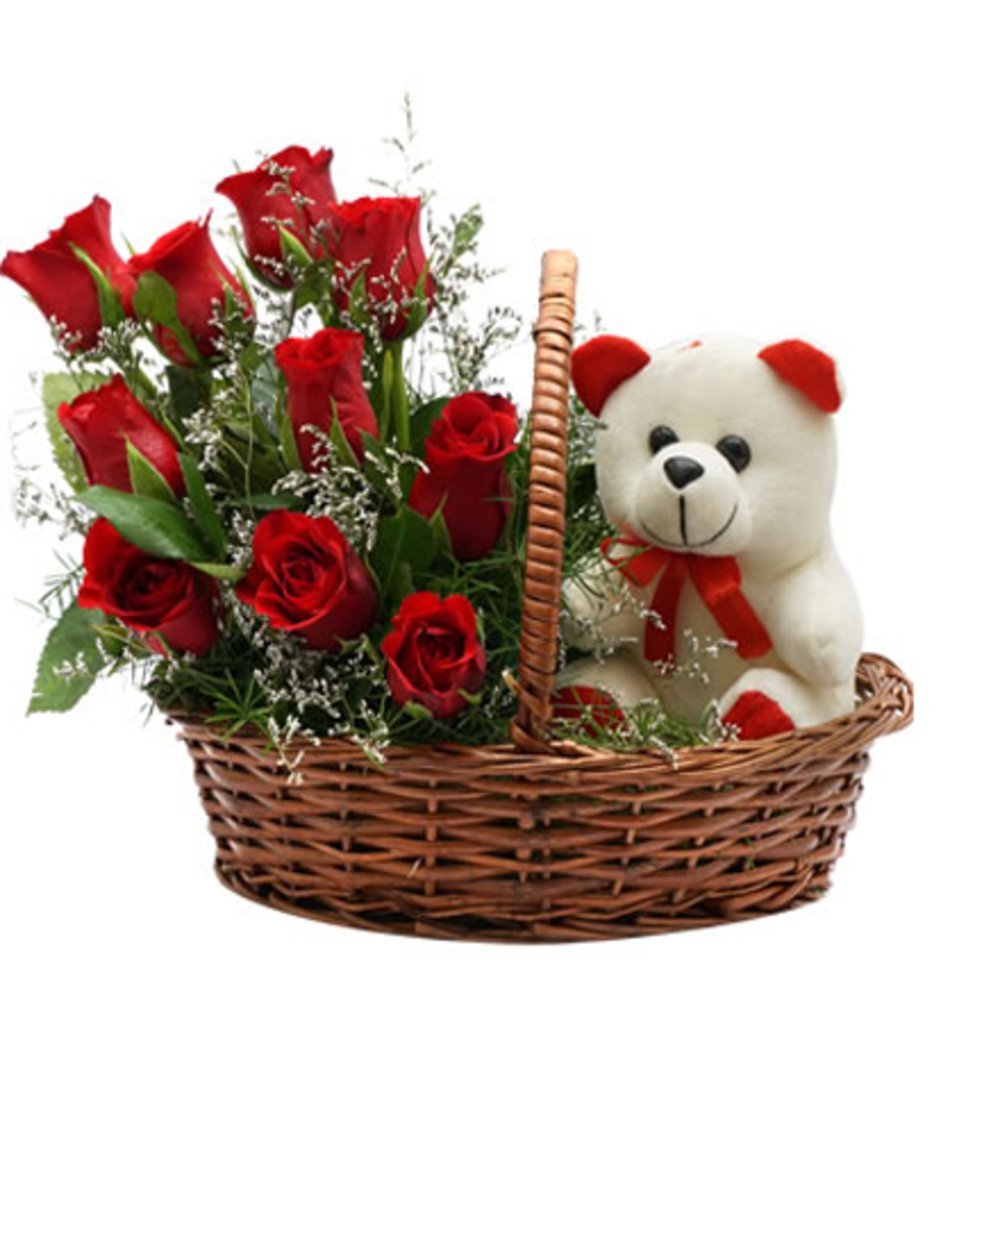 Rose Teddy Gift Basket